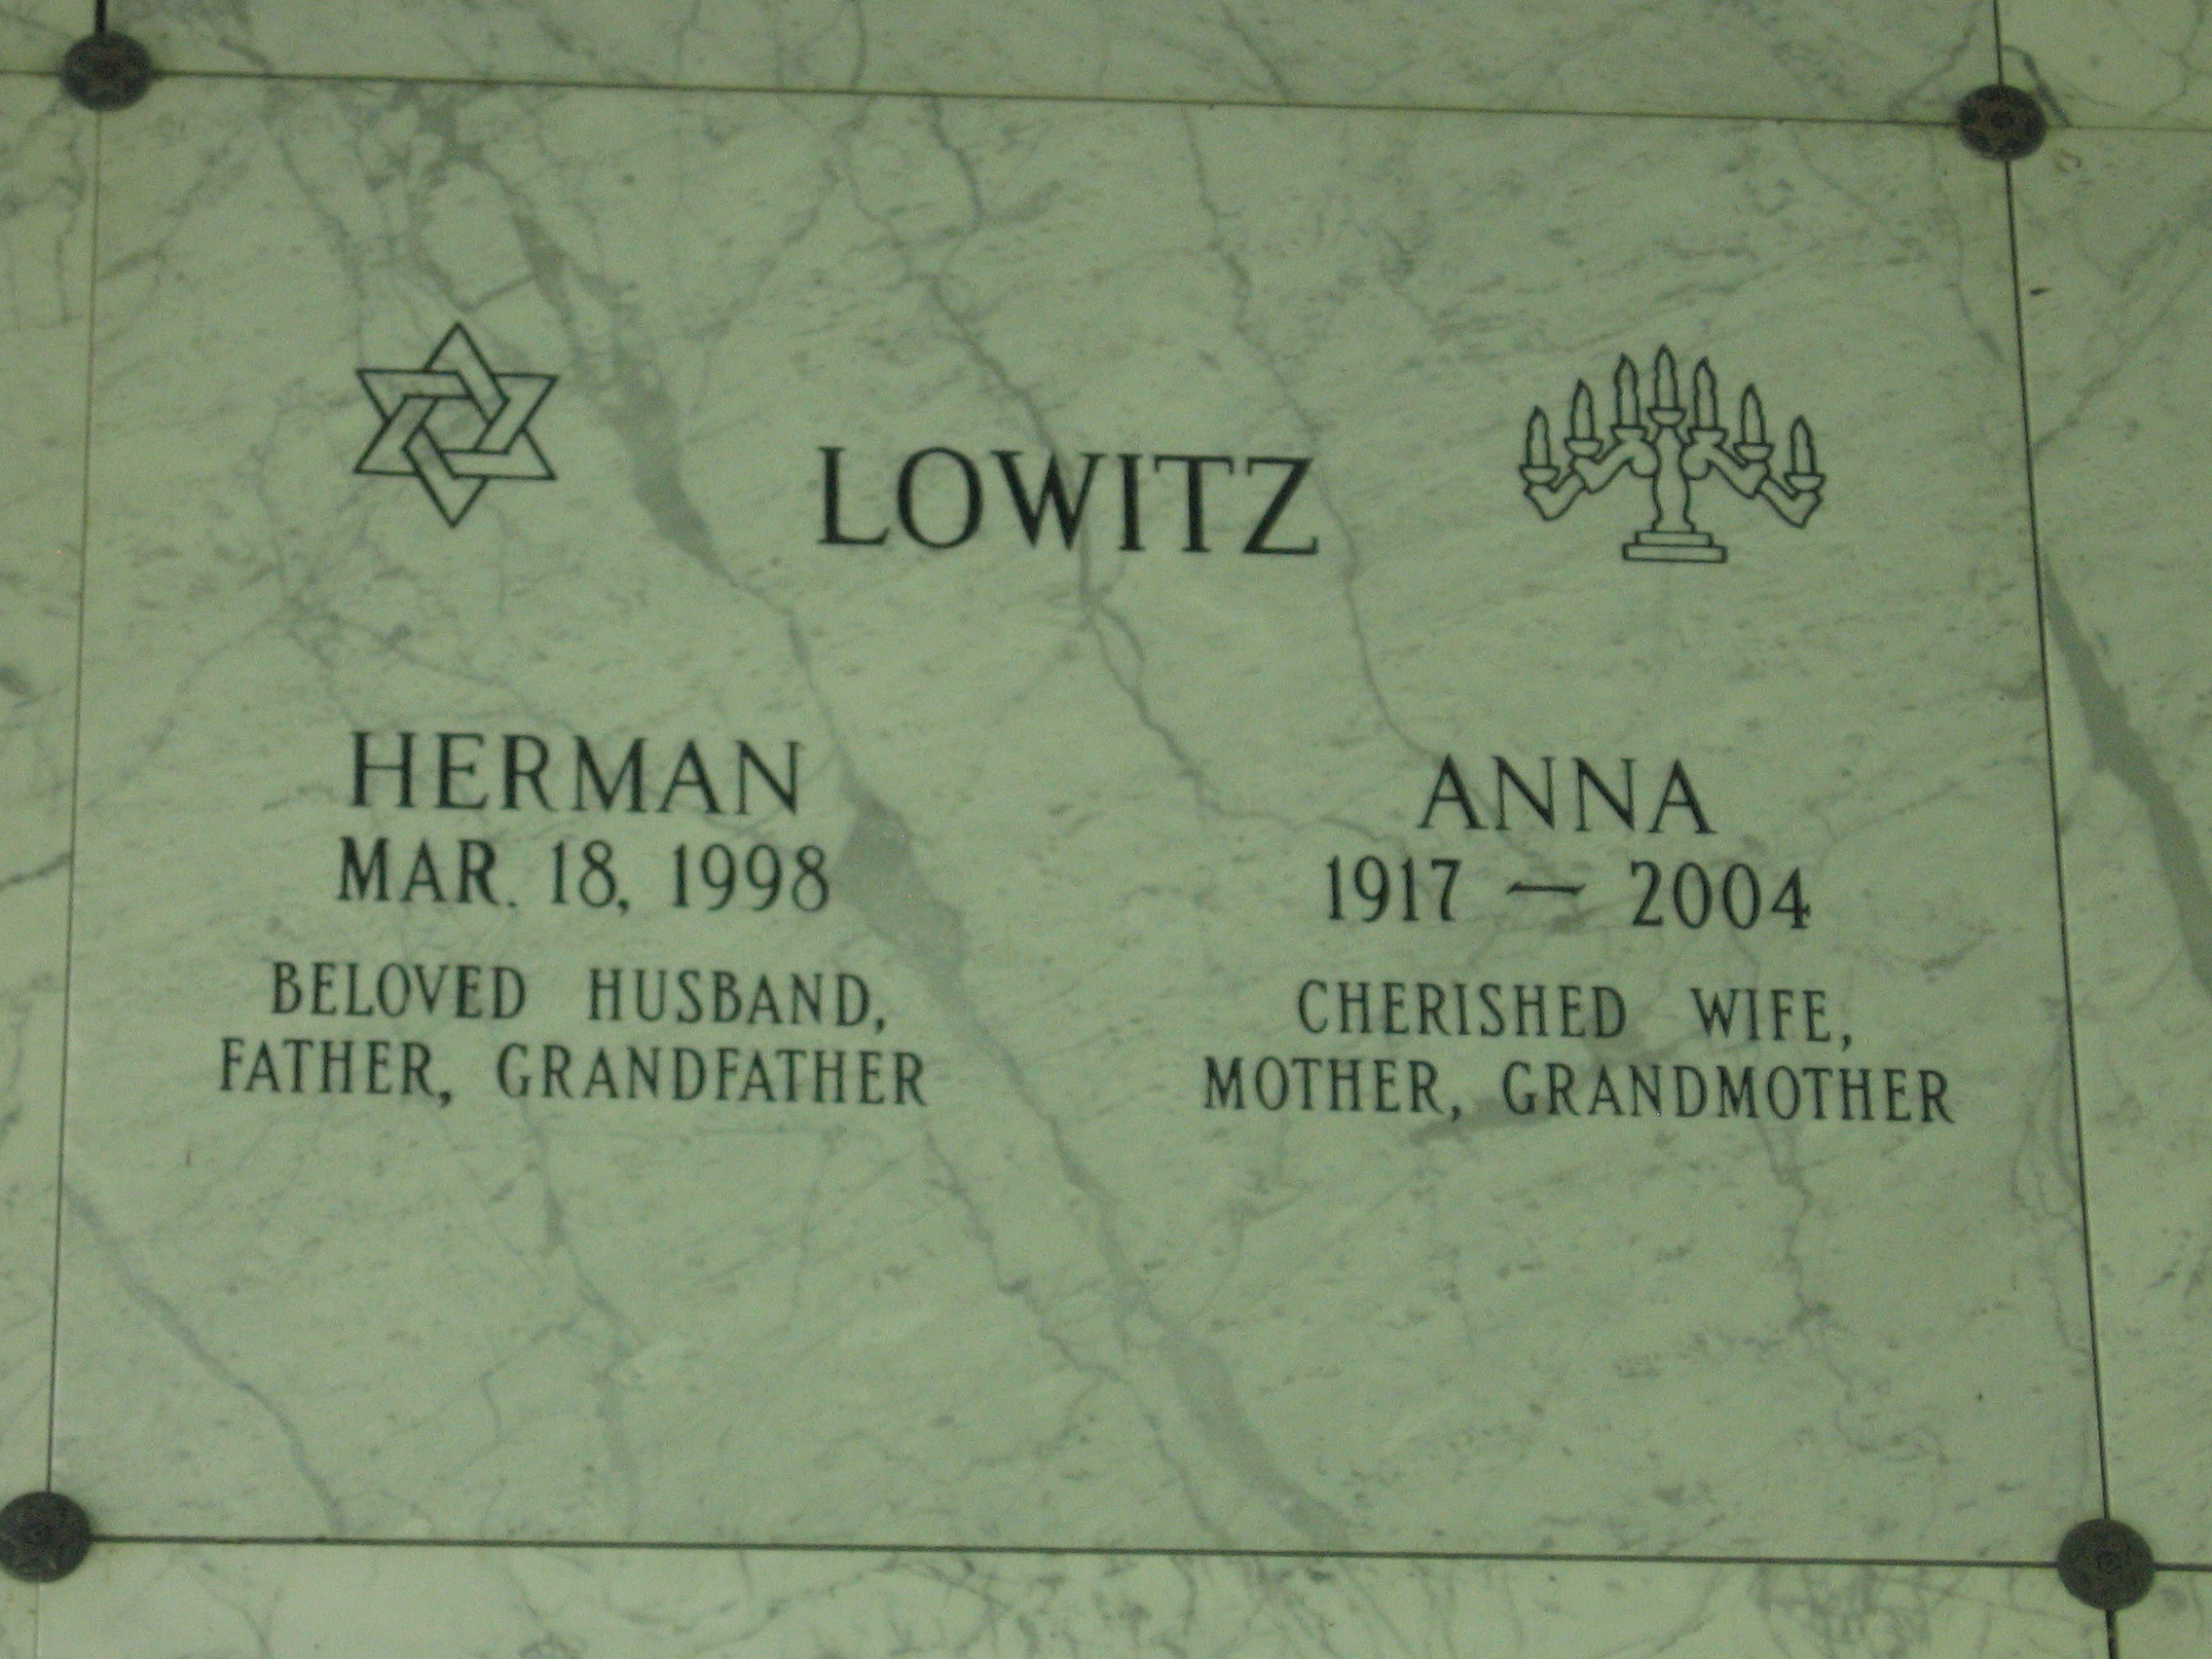 Herman Lowitz